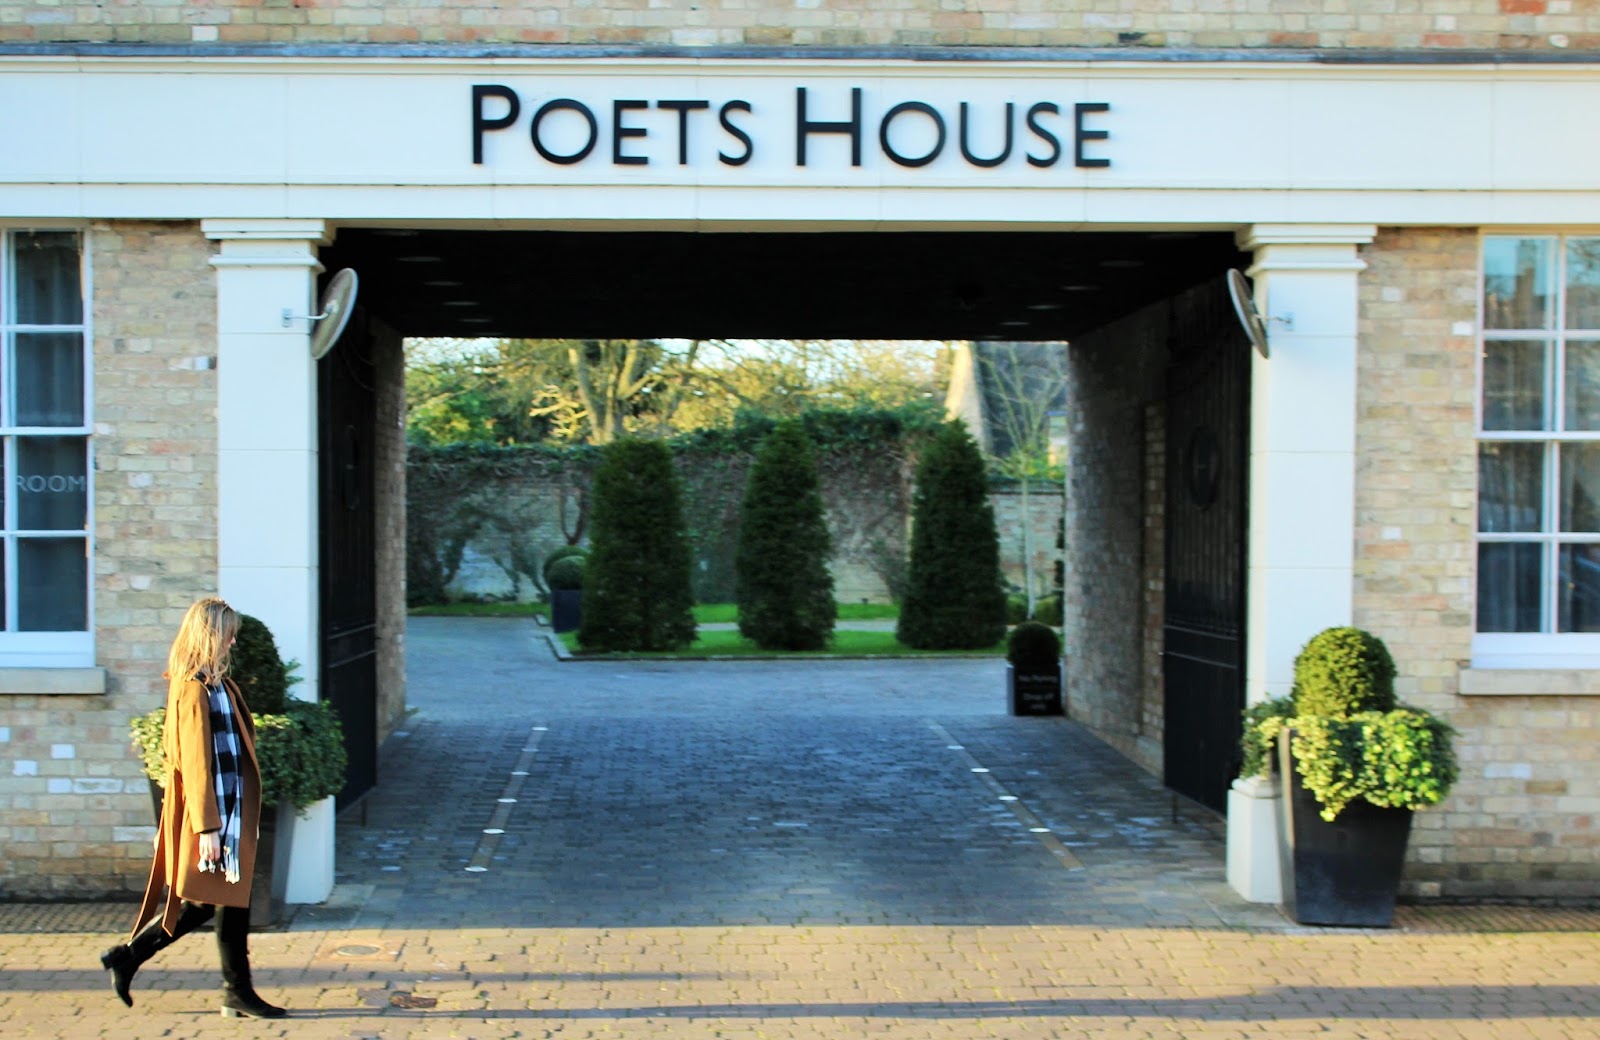 Poets House Hotel, Ely, Cambridgeshire